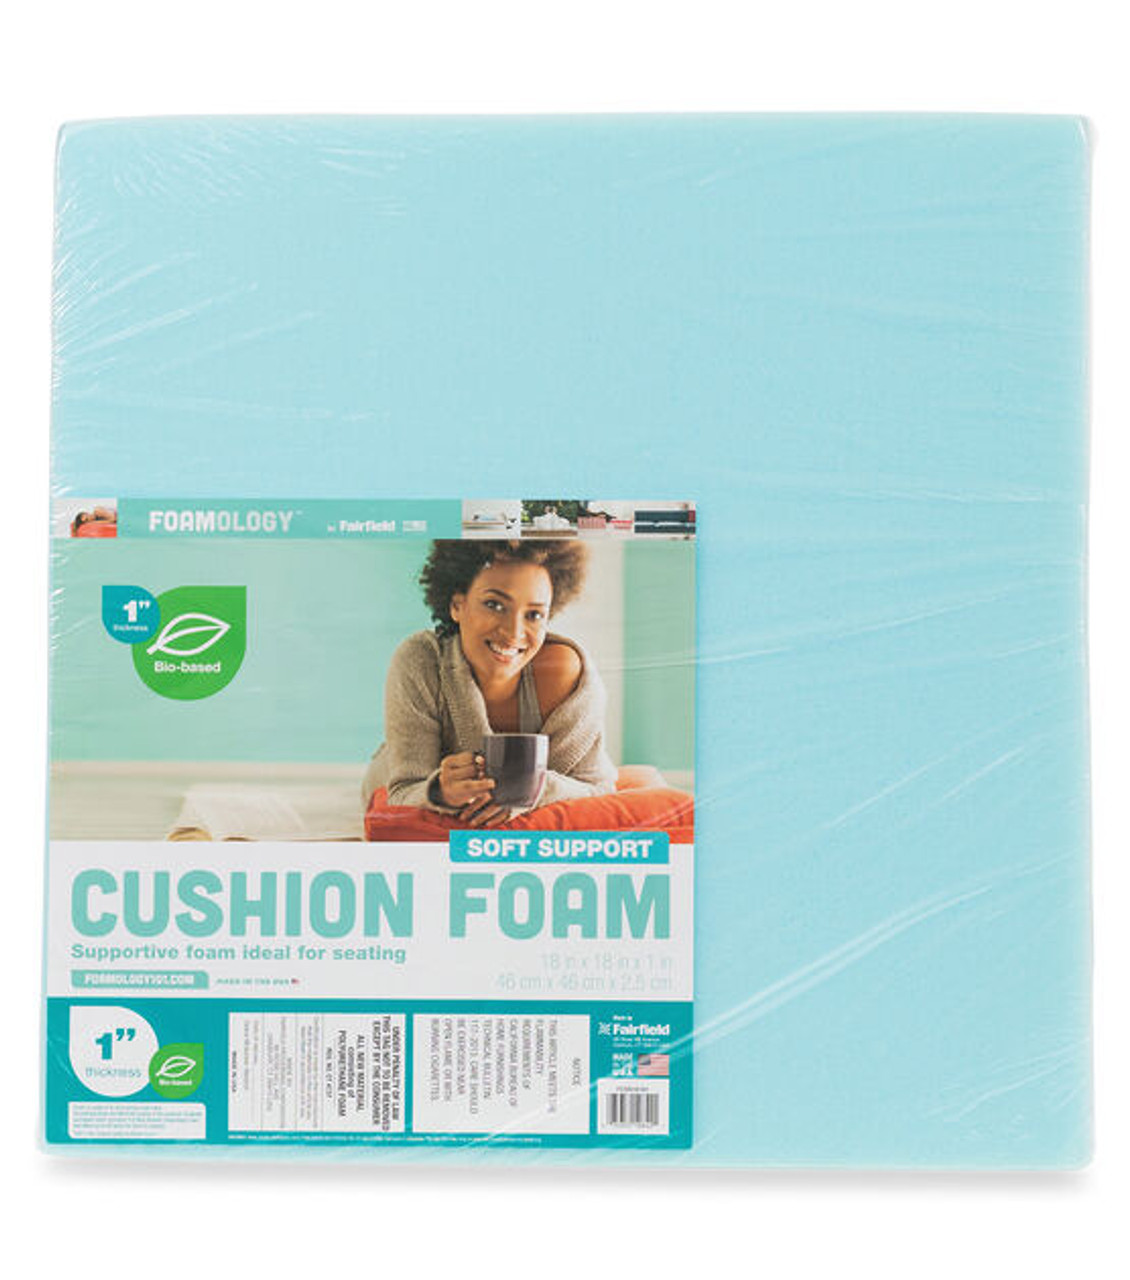 Gel Cushion with Fleece Cover - 18 x 16 x 3